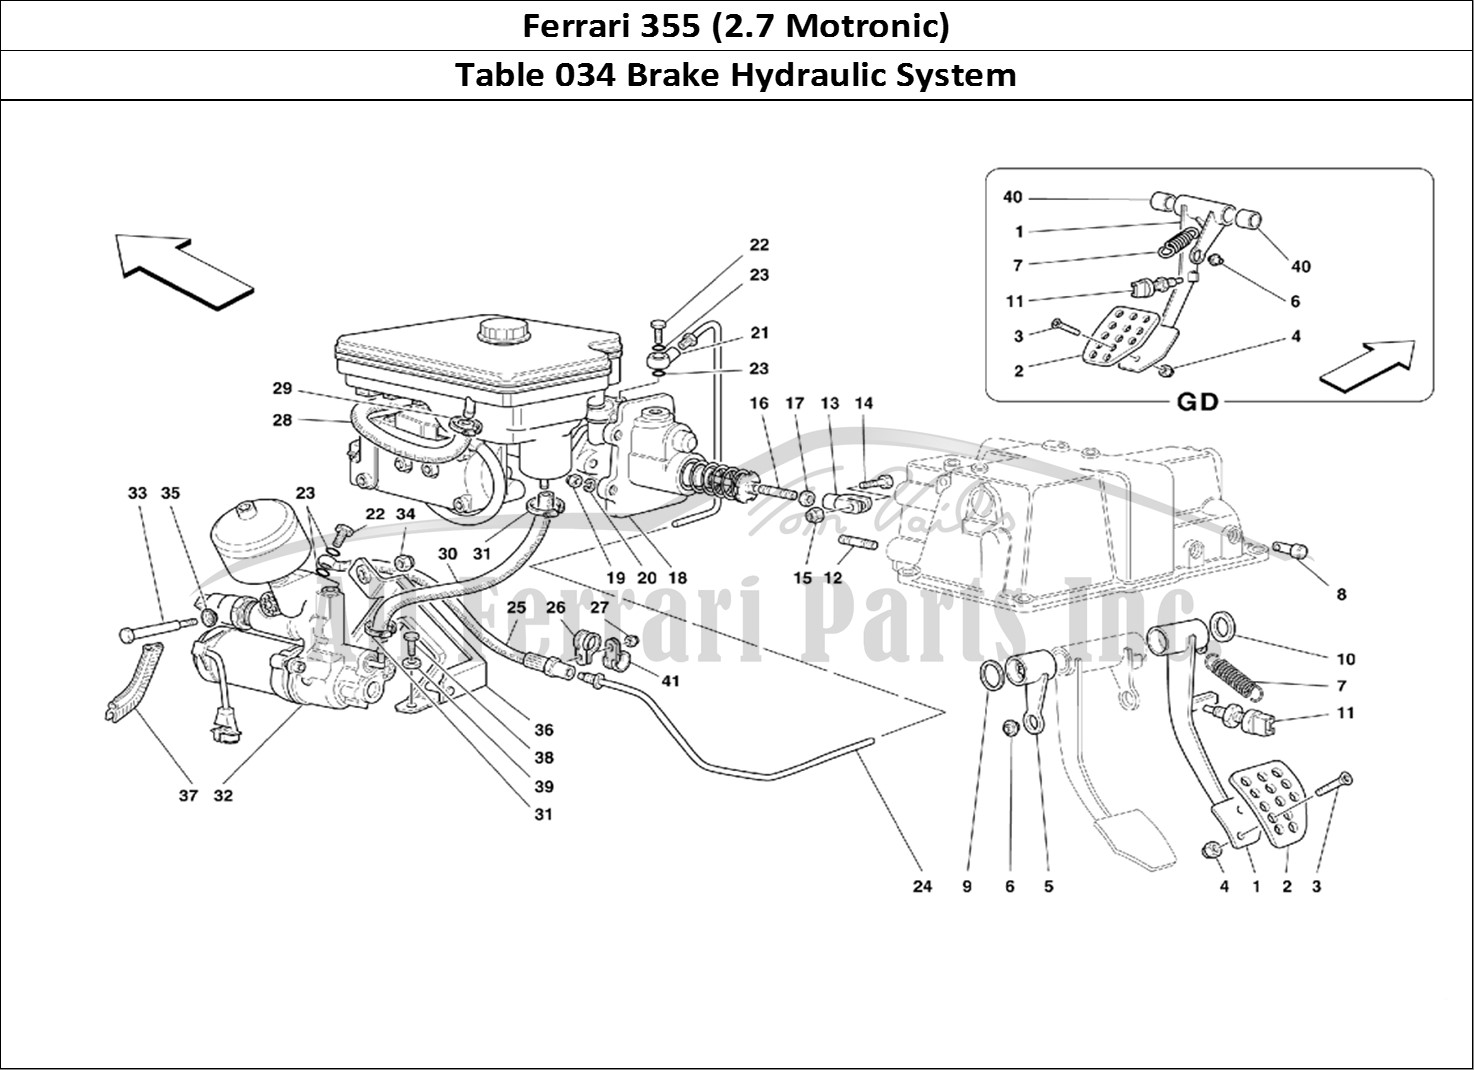 Ferrari Parts Ferrari 355 (2.7 Motronic) Page 034 Brake Hydraulic System